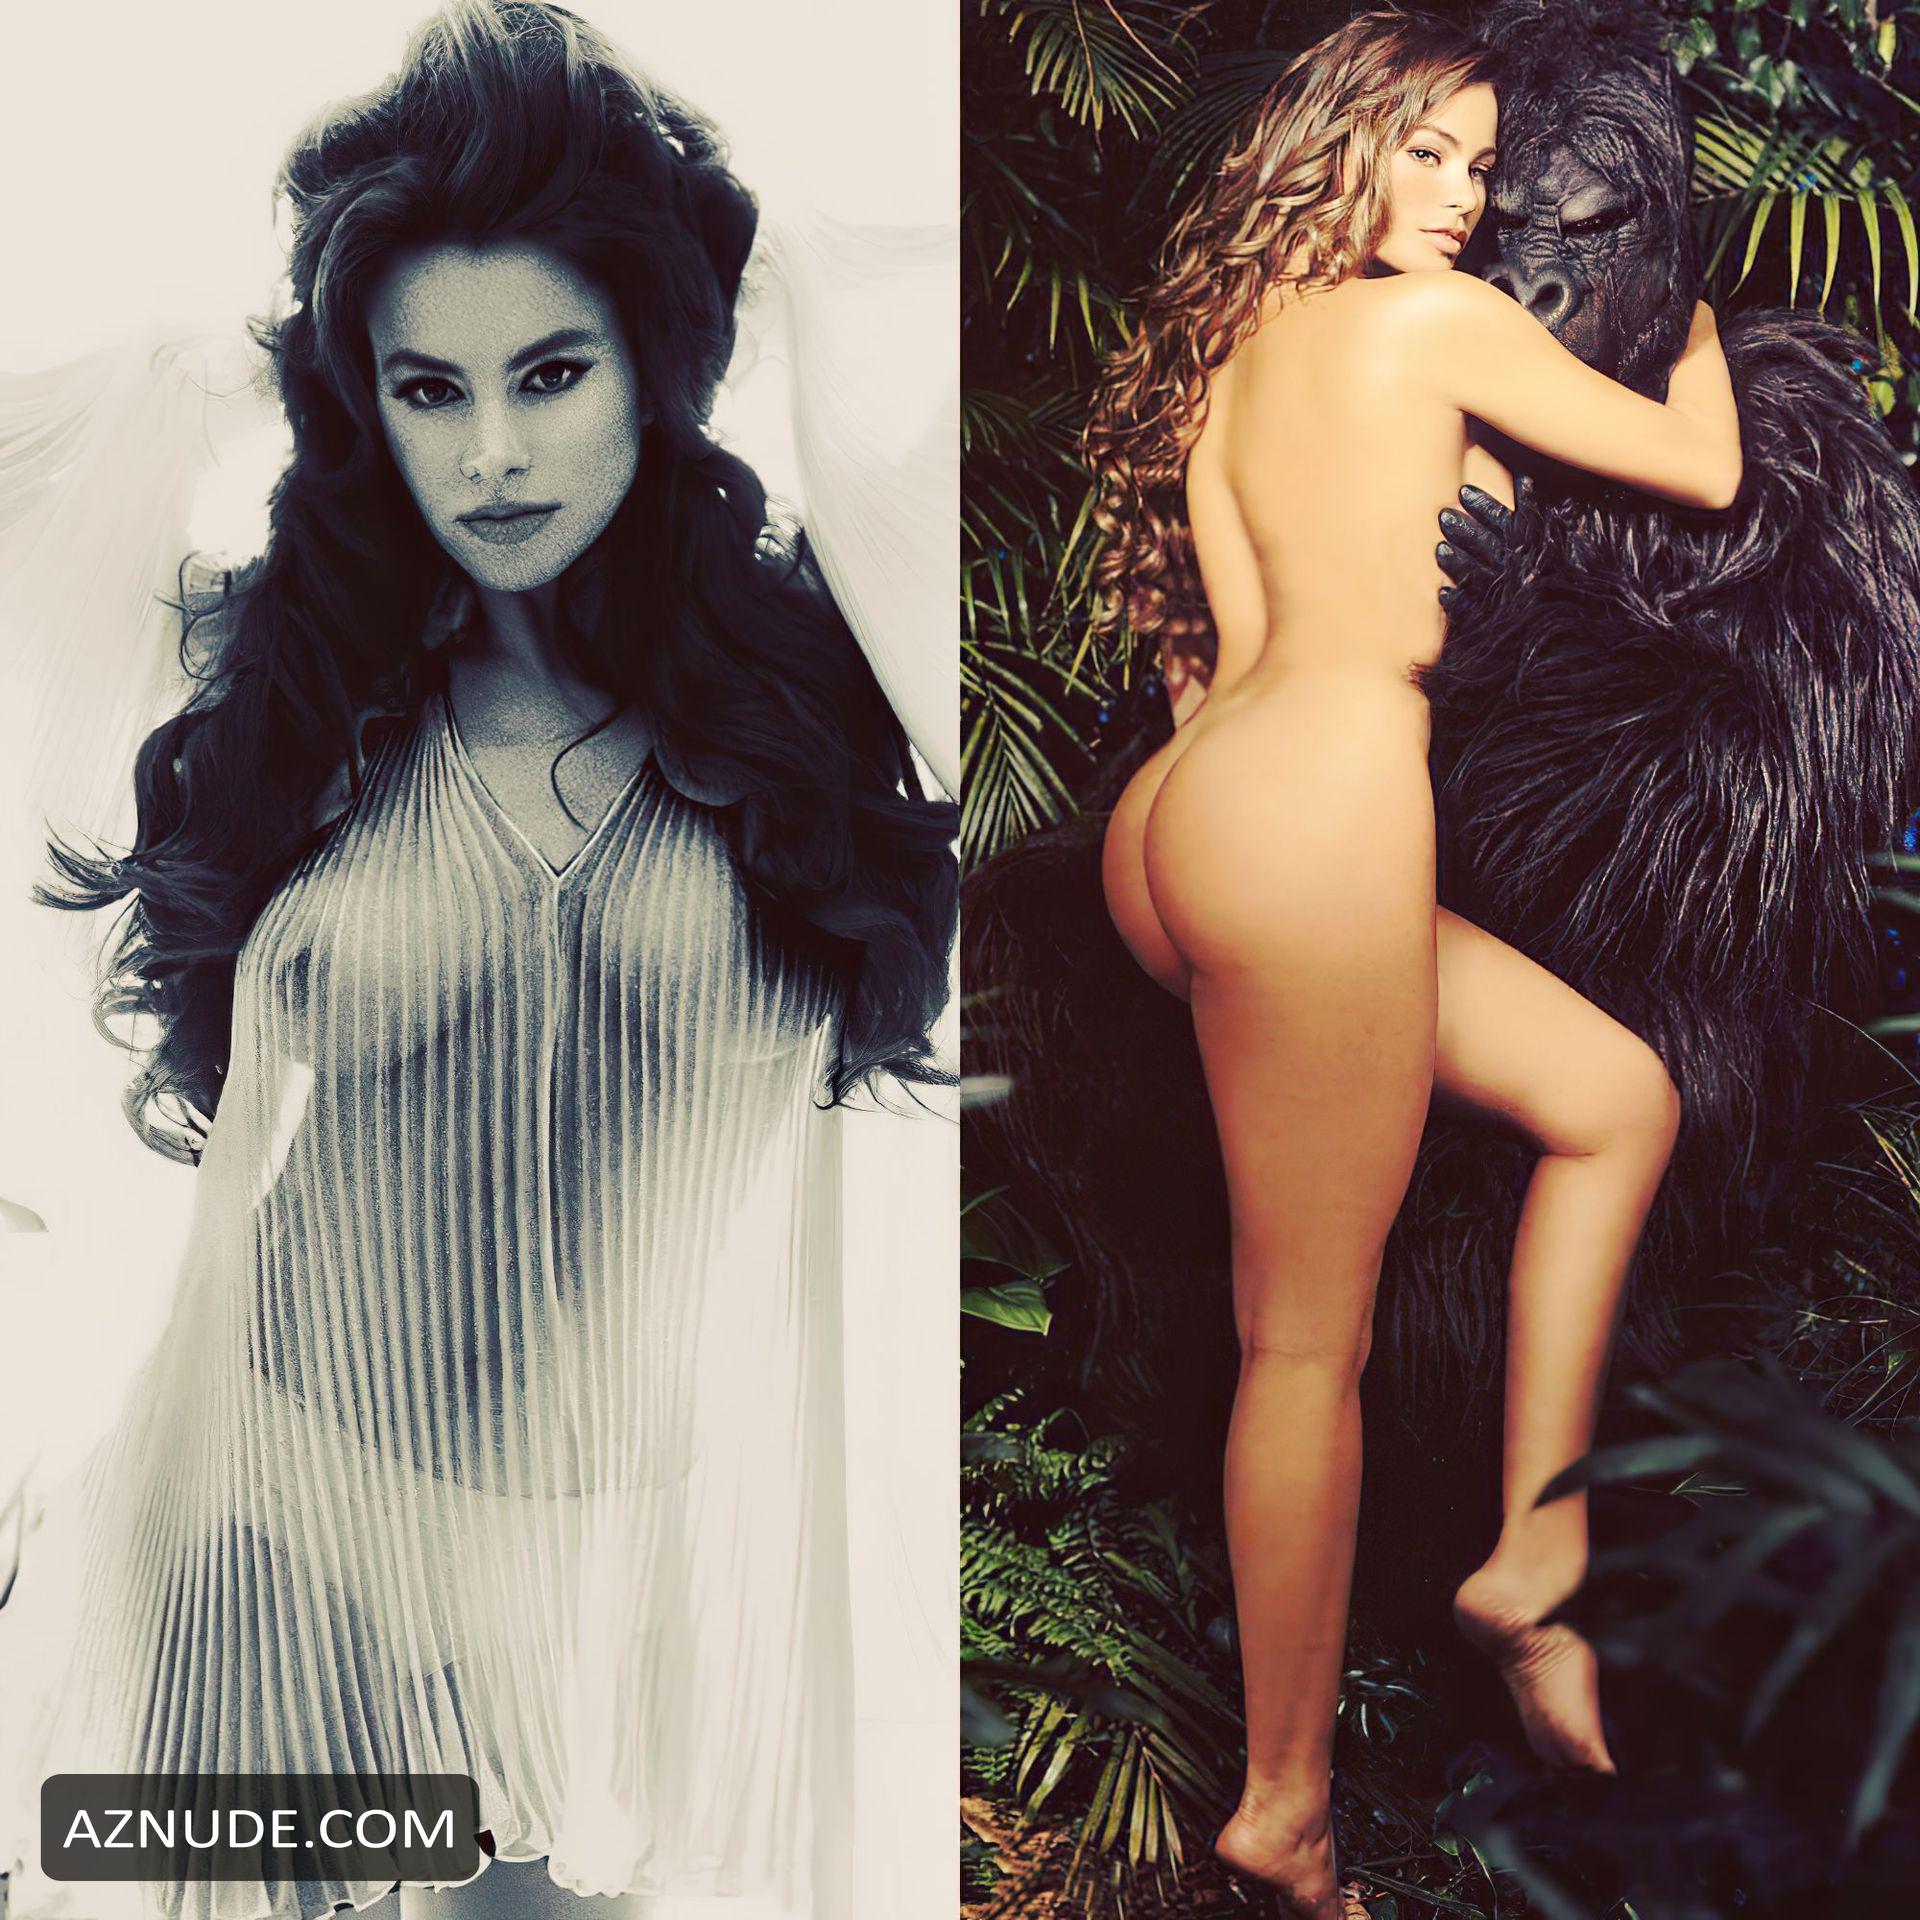 Sofia Vergara Flaunts Her Buttocks Posing In Bikini With Her Year